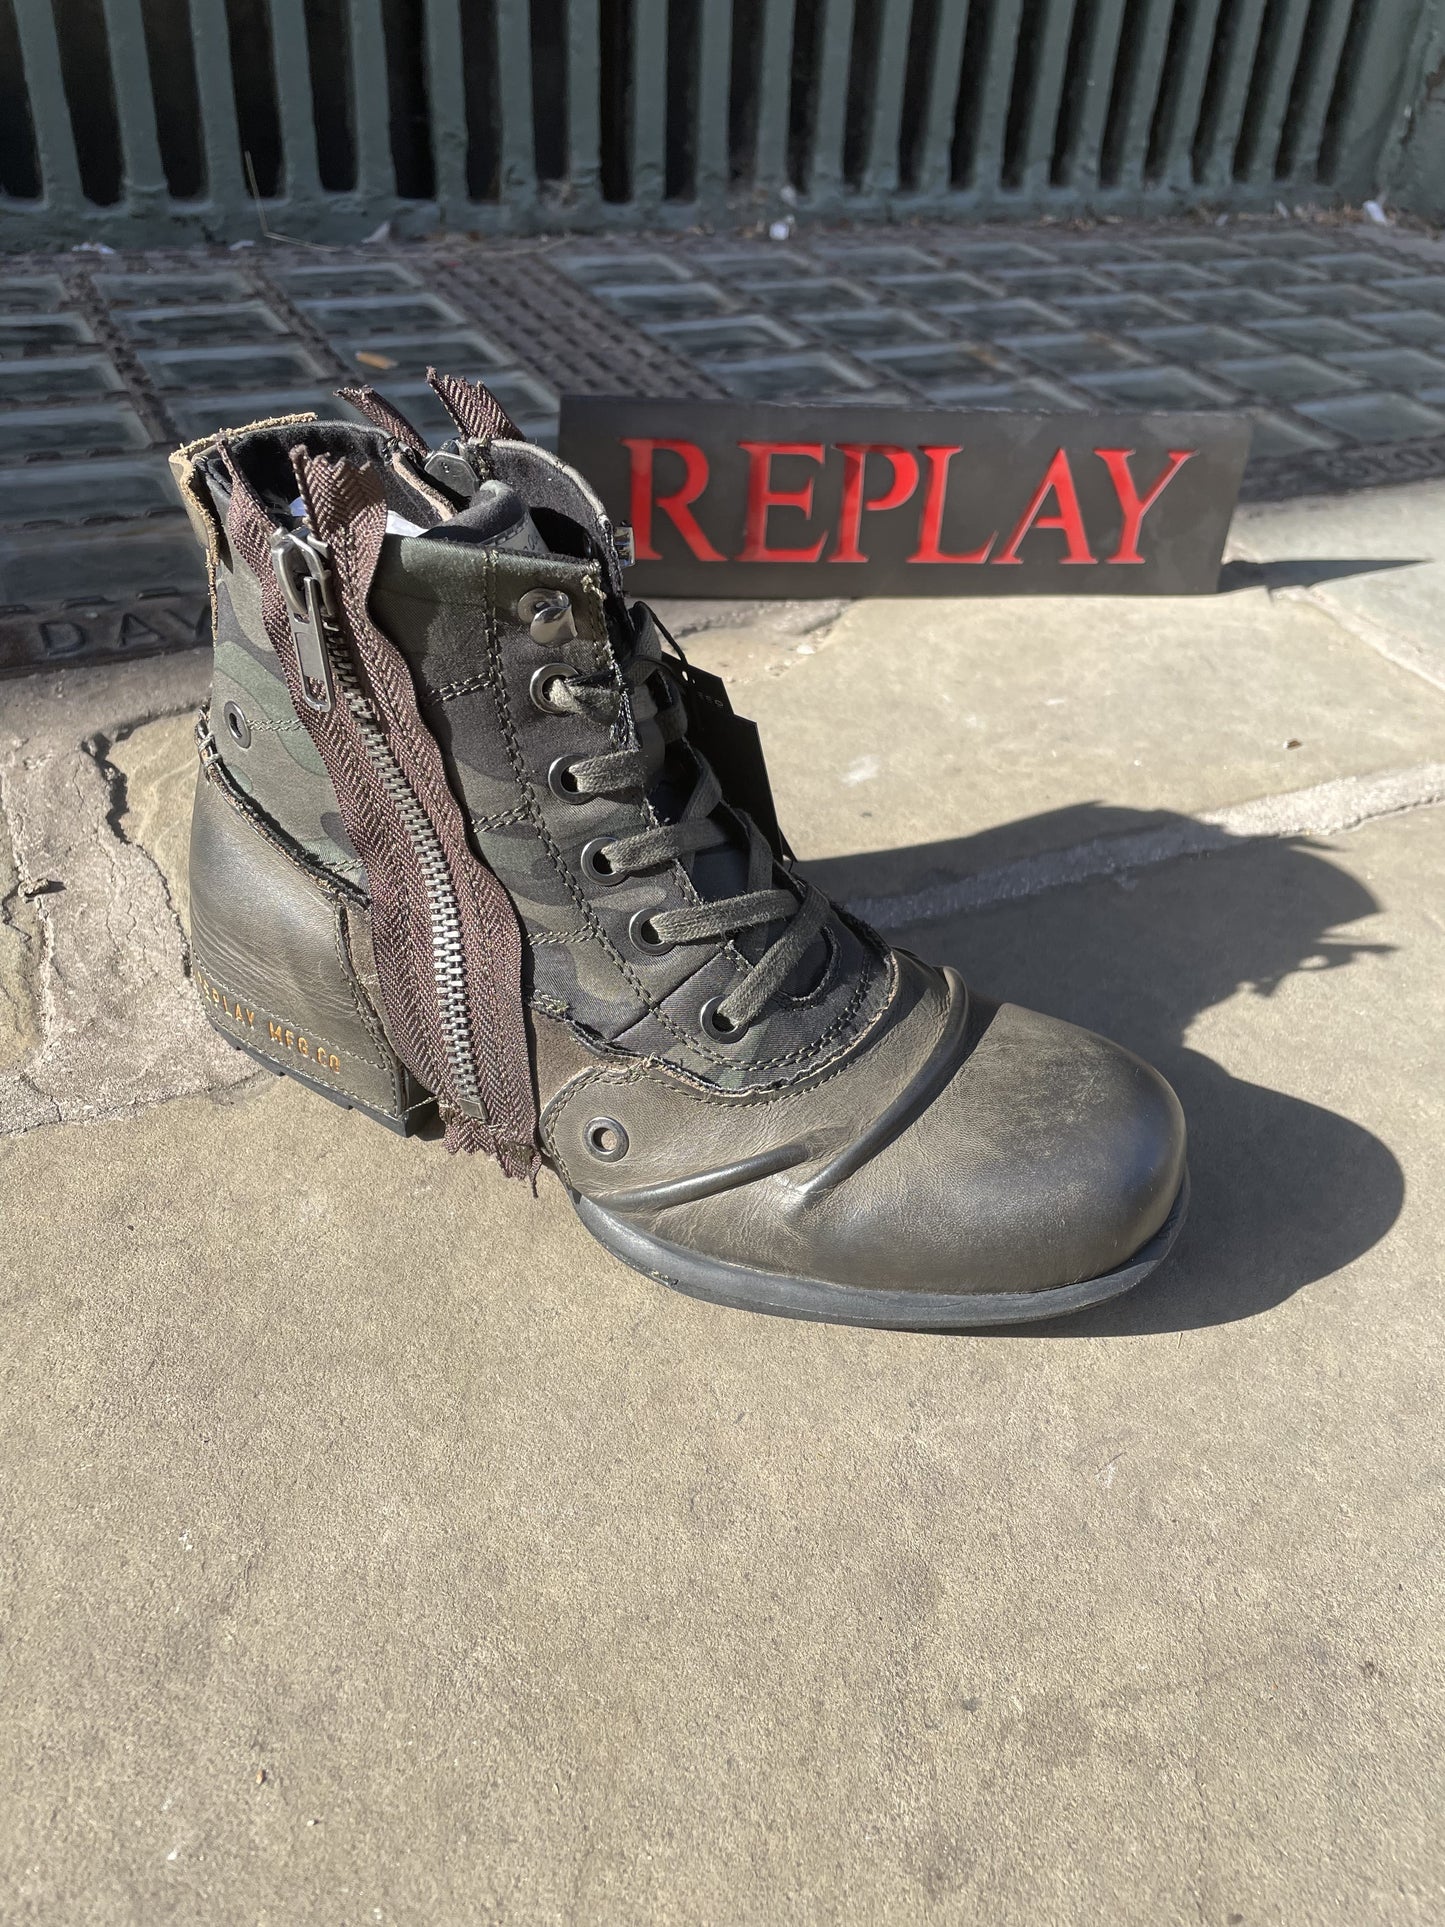 Replay Clutch Black / Green Camo Boot